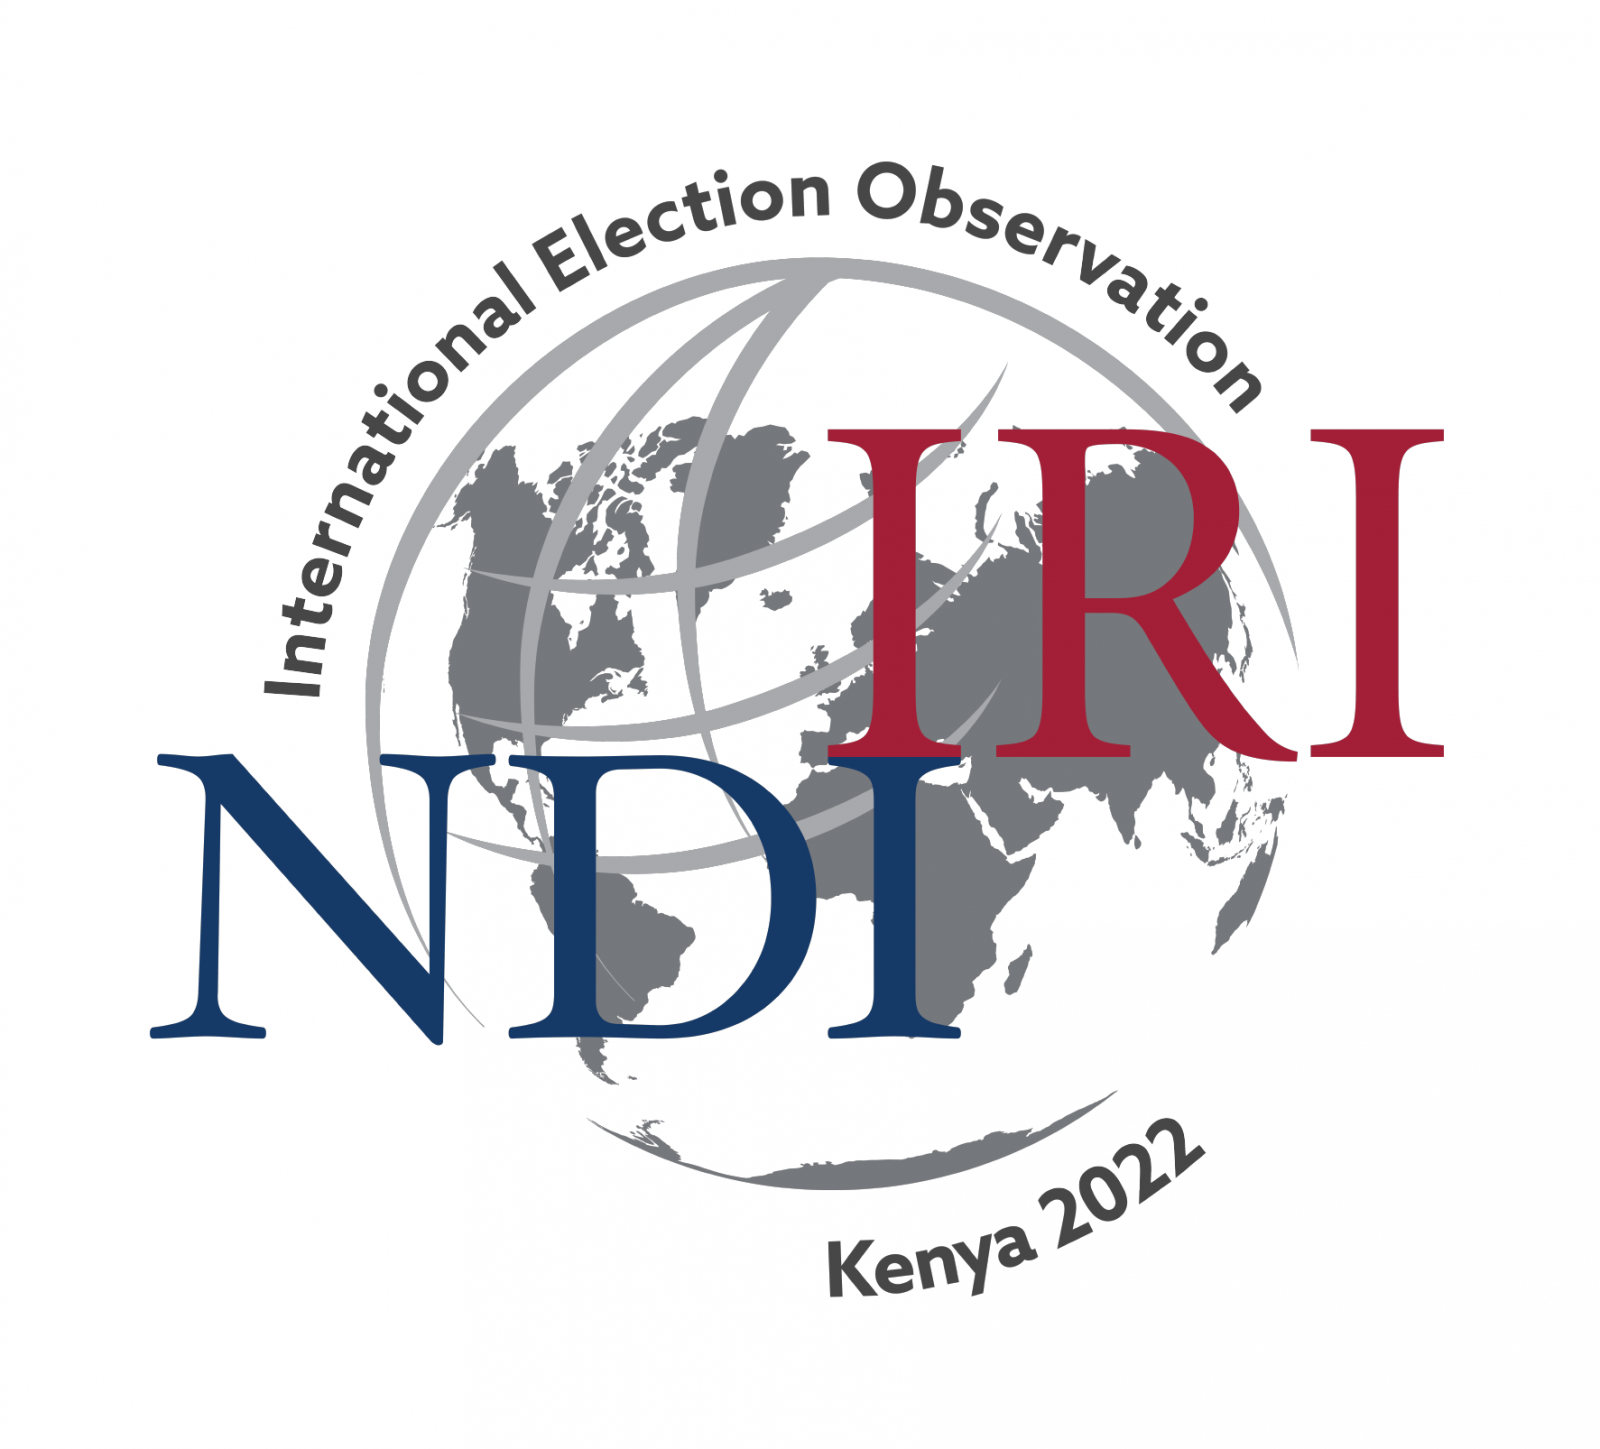 Statement of Joint IRI/NDI Pre-Election Assessment Mission to Kenya